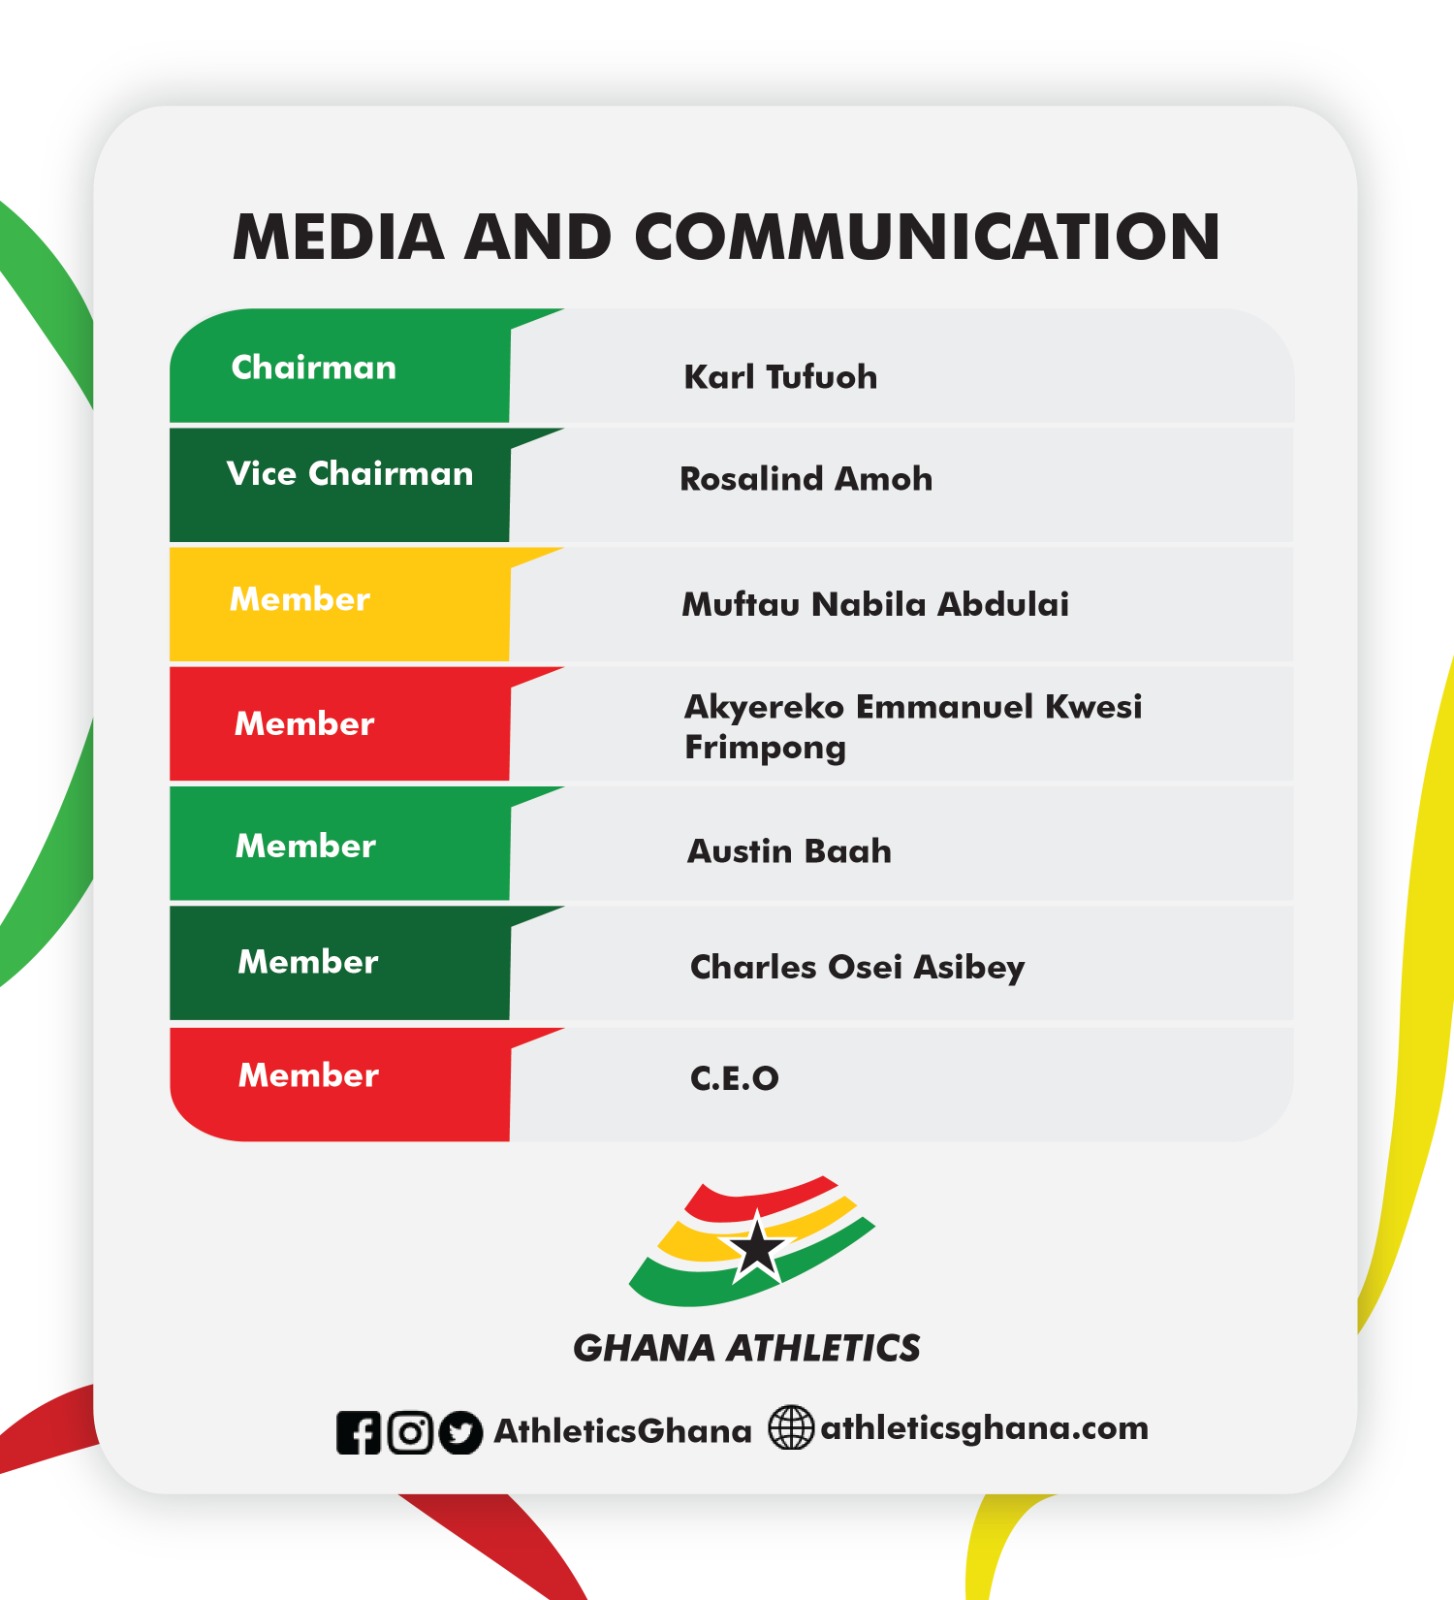 Karl Tufuoh chairs GA Communications Committee, Muftawu, Akyereko & four others named